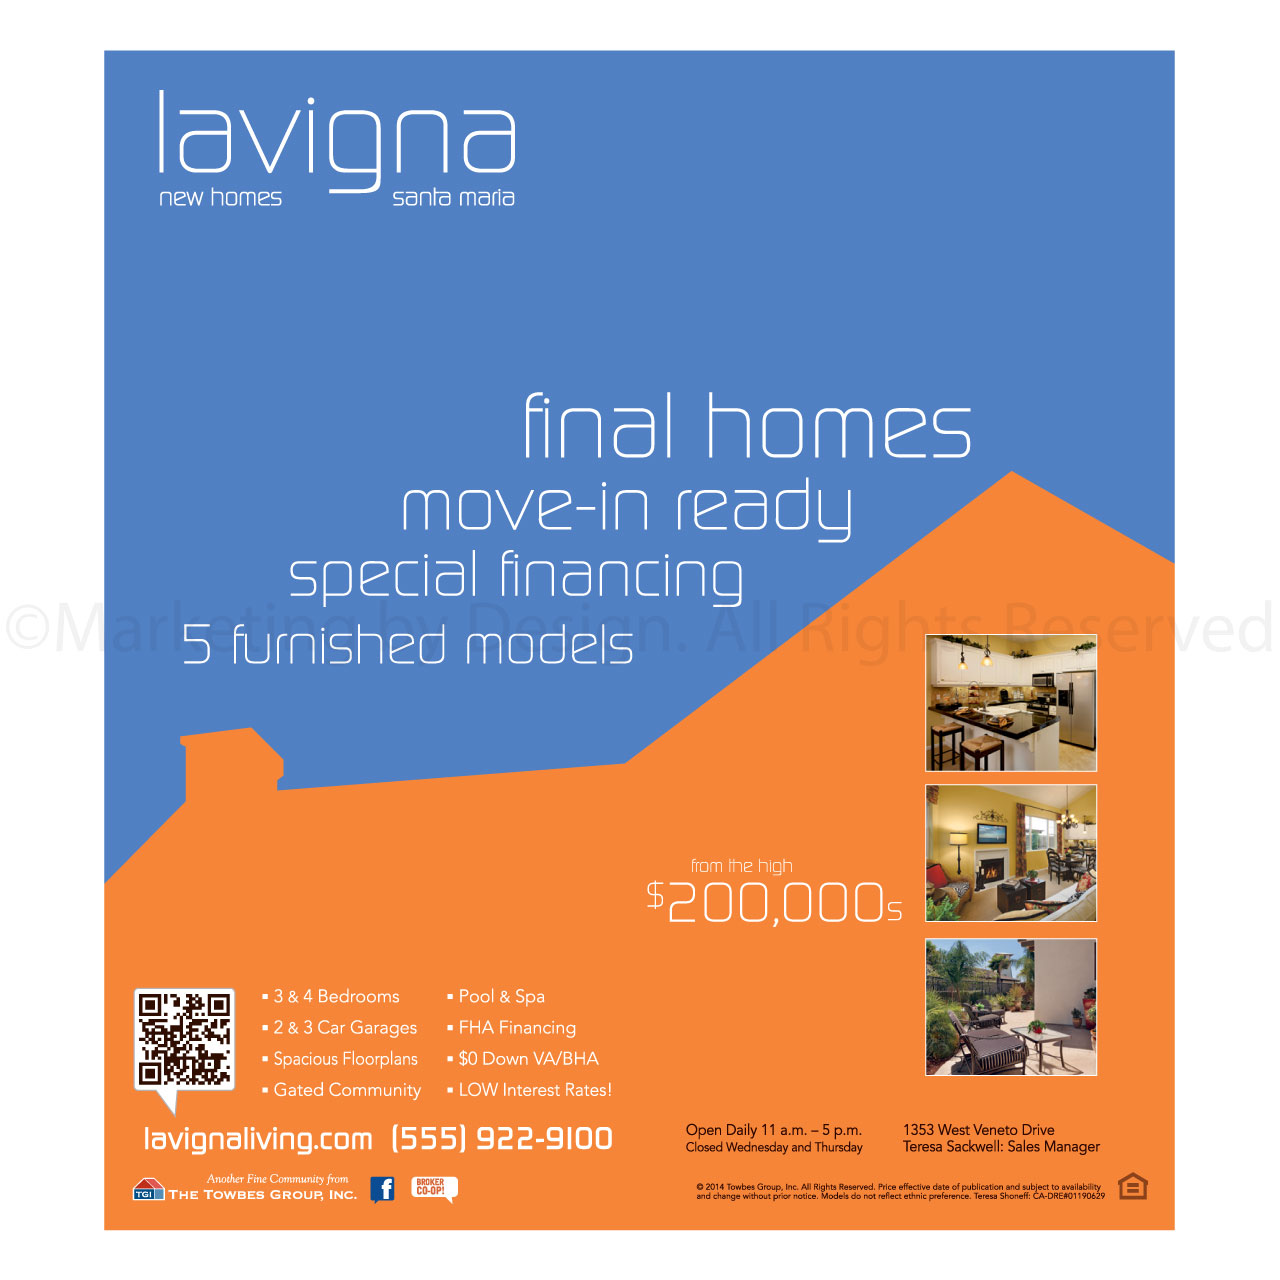 Marketing by Design | Portfolio: Lavigna Final Homes Ad